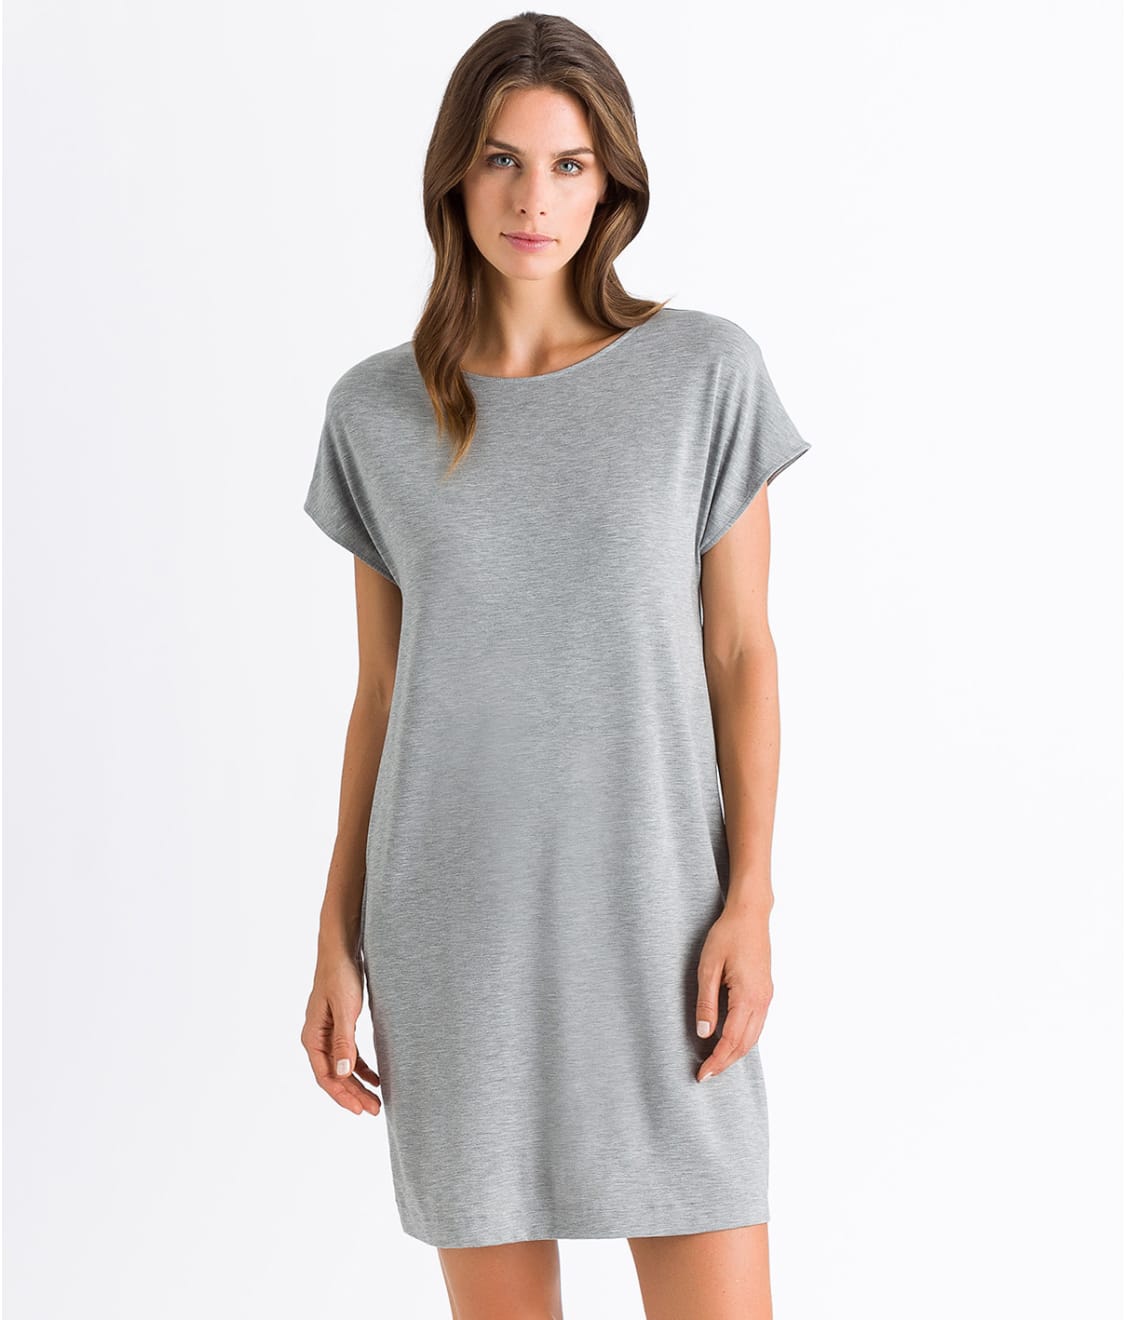 Hanro: Natural Elegance Knit Sleep Shirt 76387